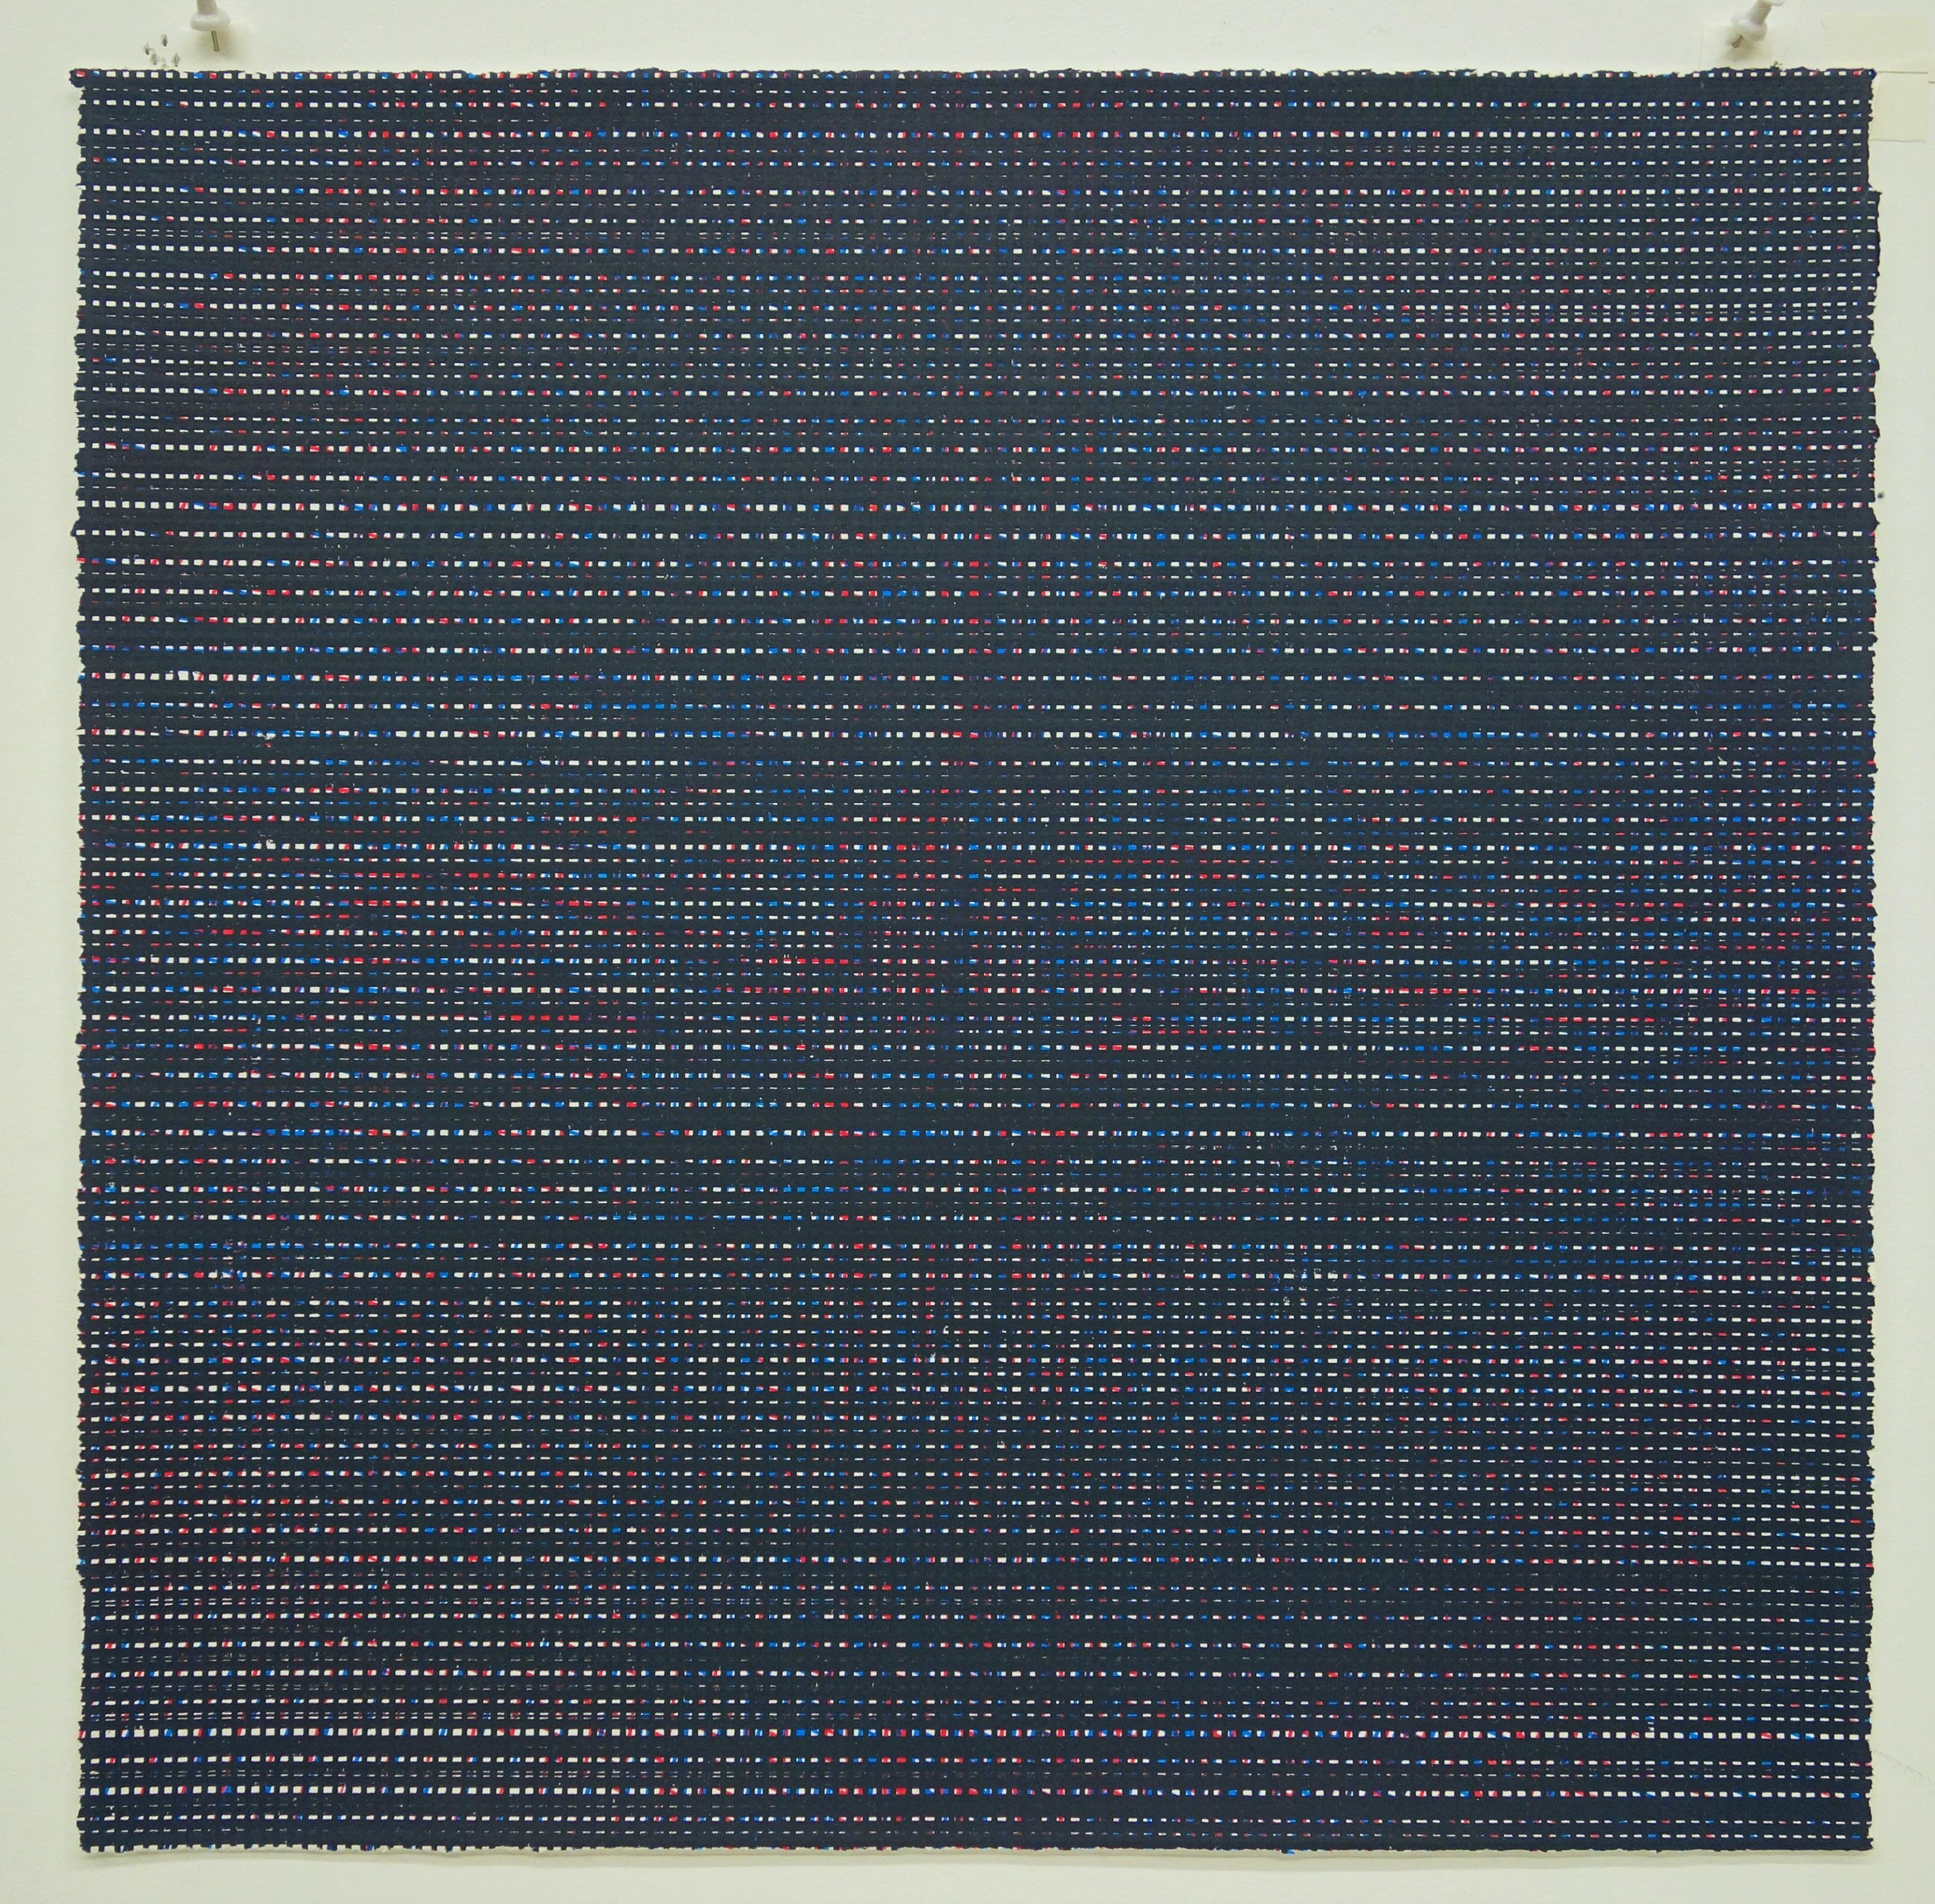 Rob de Oude, Untitled-Wassaic 8, 2016, silkscreen, 18 x 18 inches, Suite of 10 7